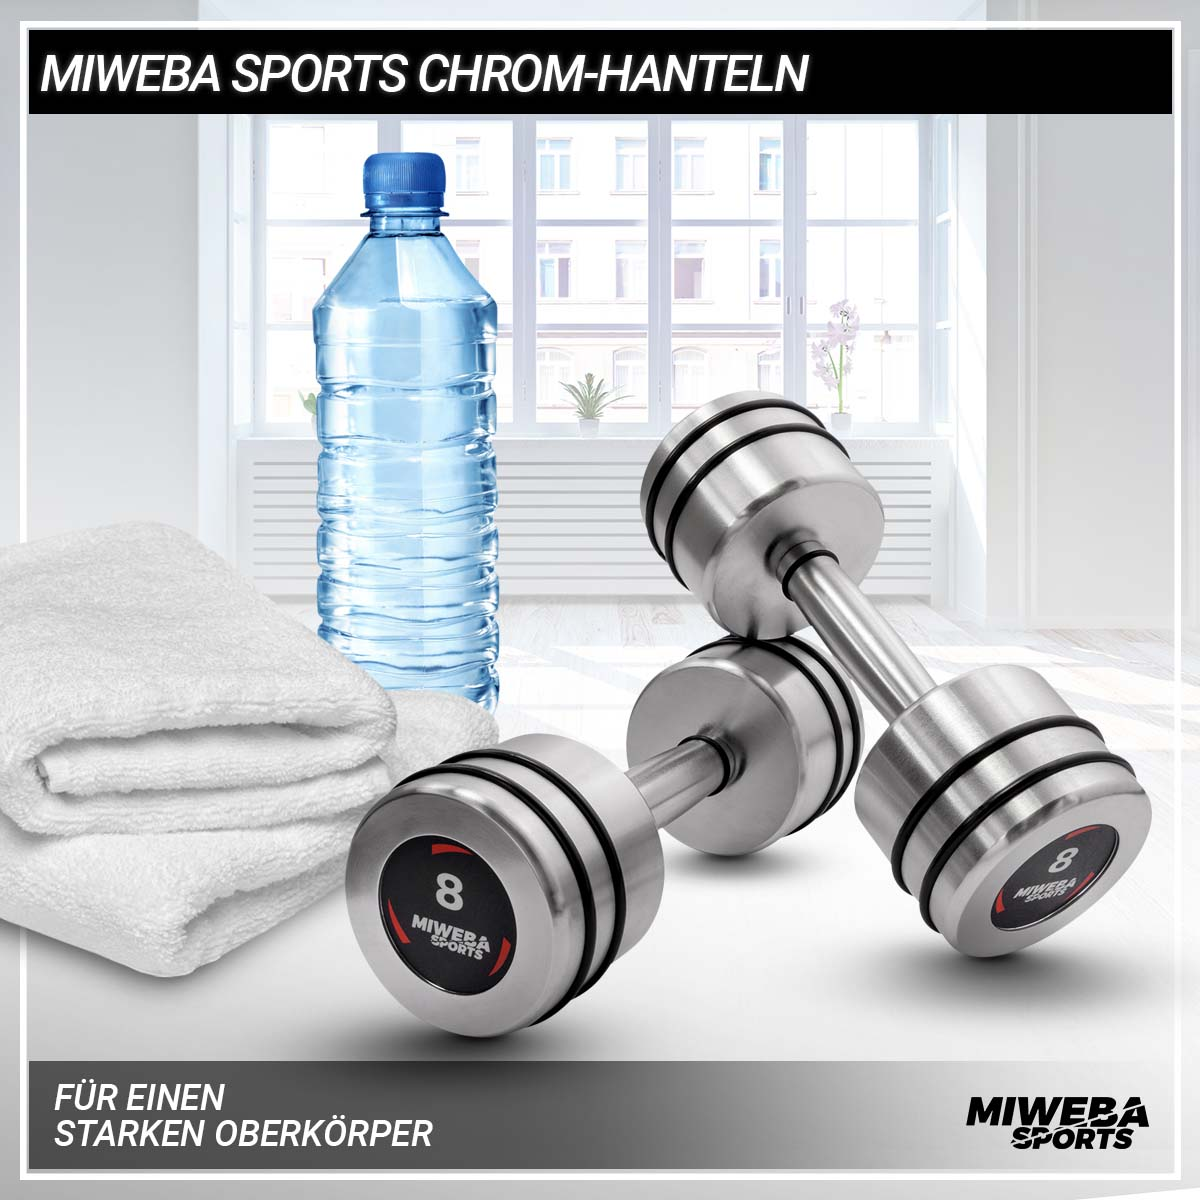 MIWEBA silber Kurzhanteln, 2x kg Hanteln 8.0 Matt Chrom SPORTS Fitnesszubehör